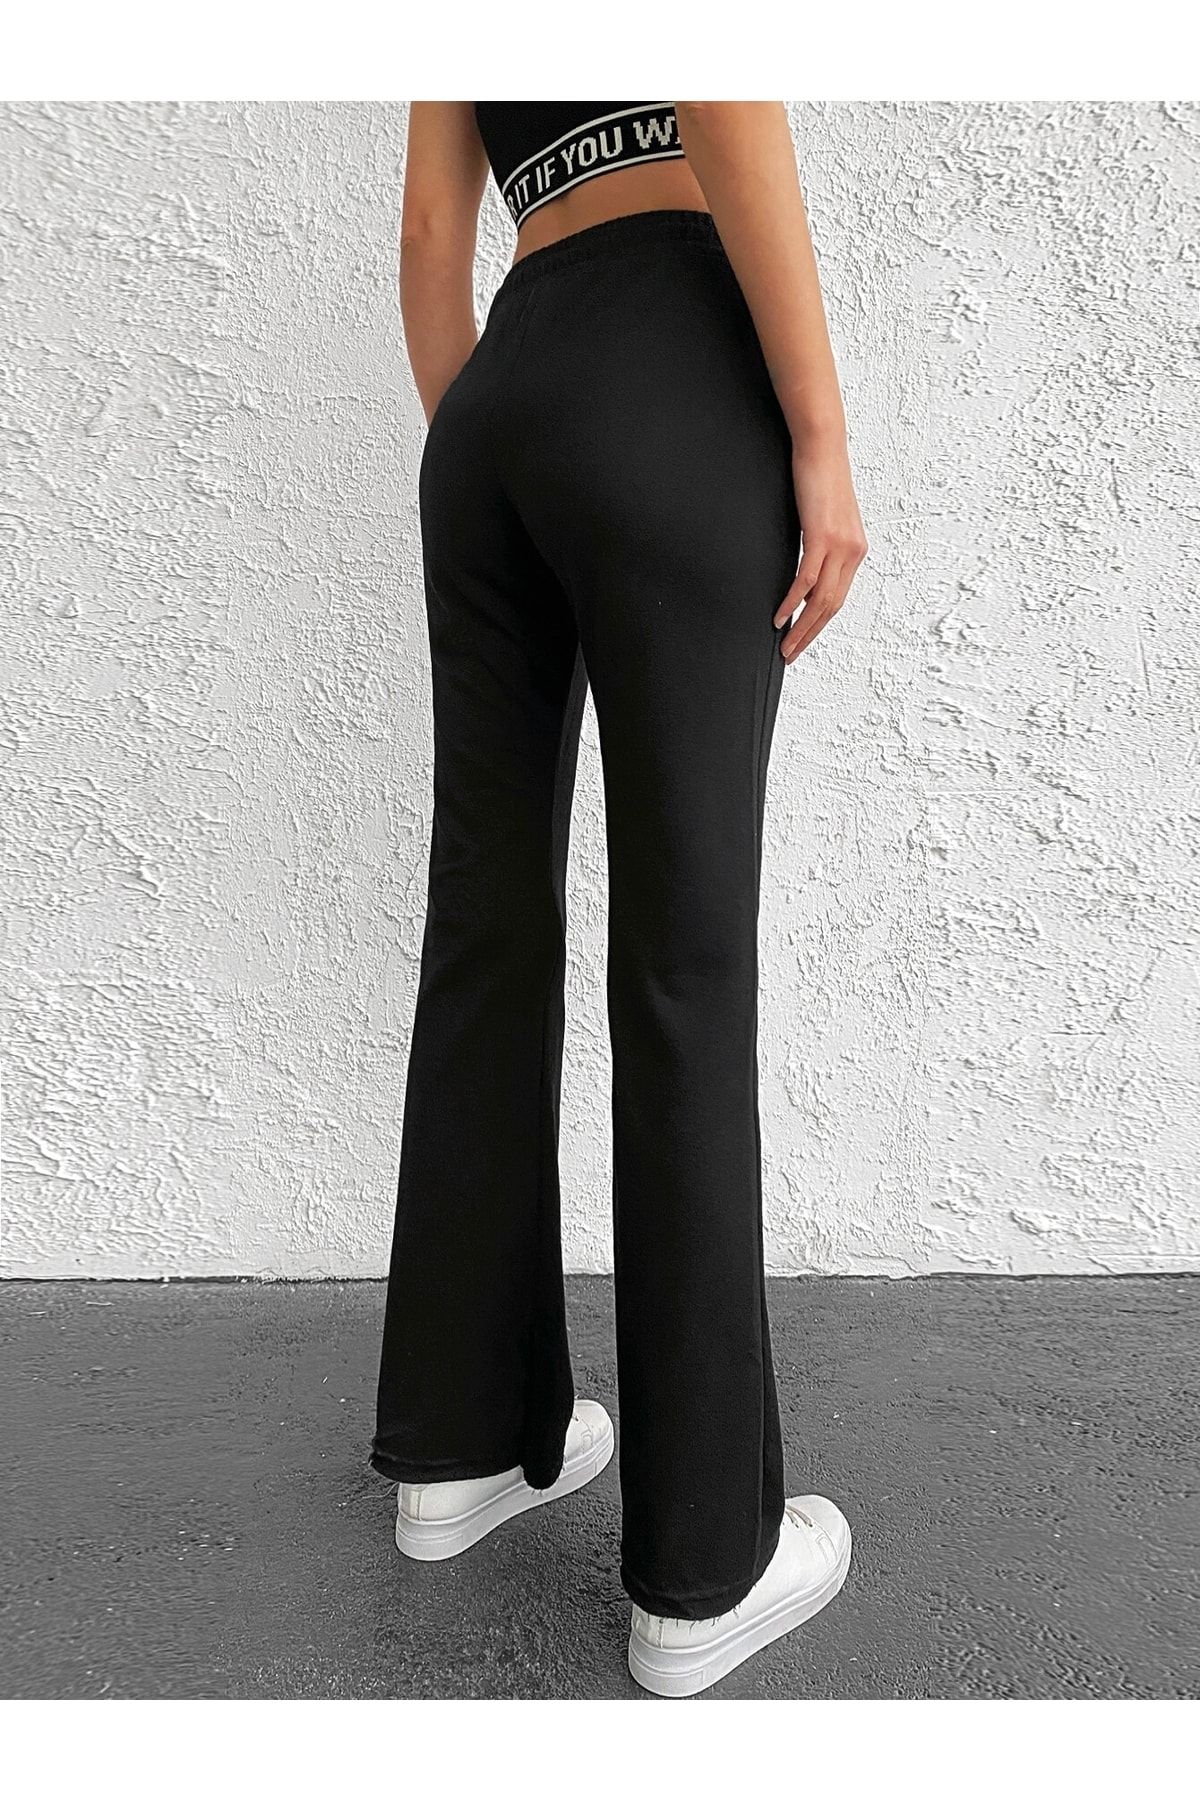 LE CARAMBOLE Women's Black Wide Leg Combed Cotton Sweatpants - Trendyol